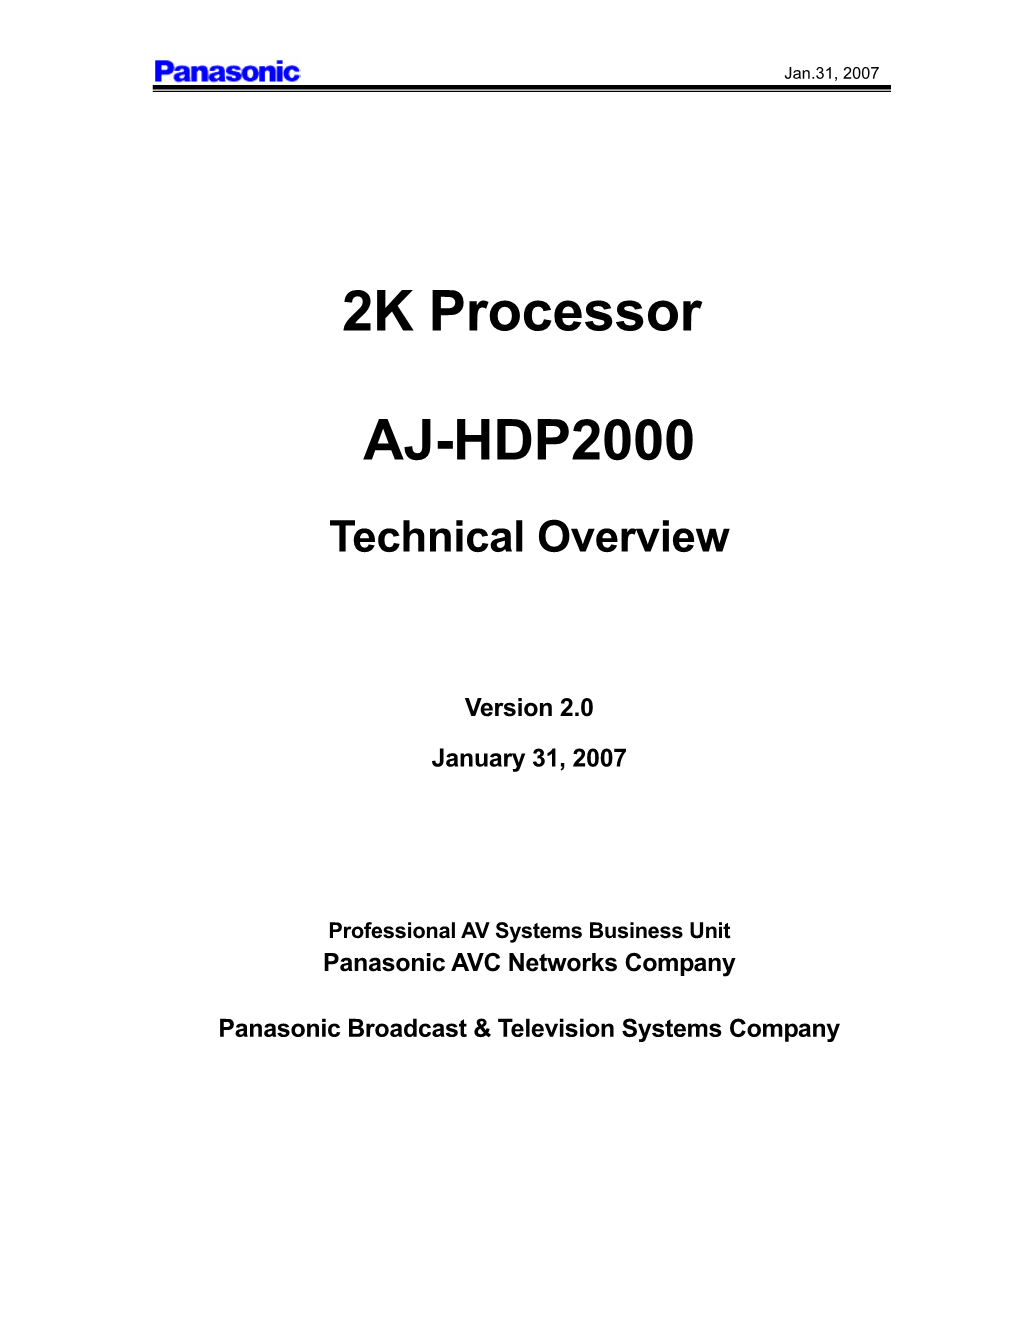 2K Processor AJ-HDP2000